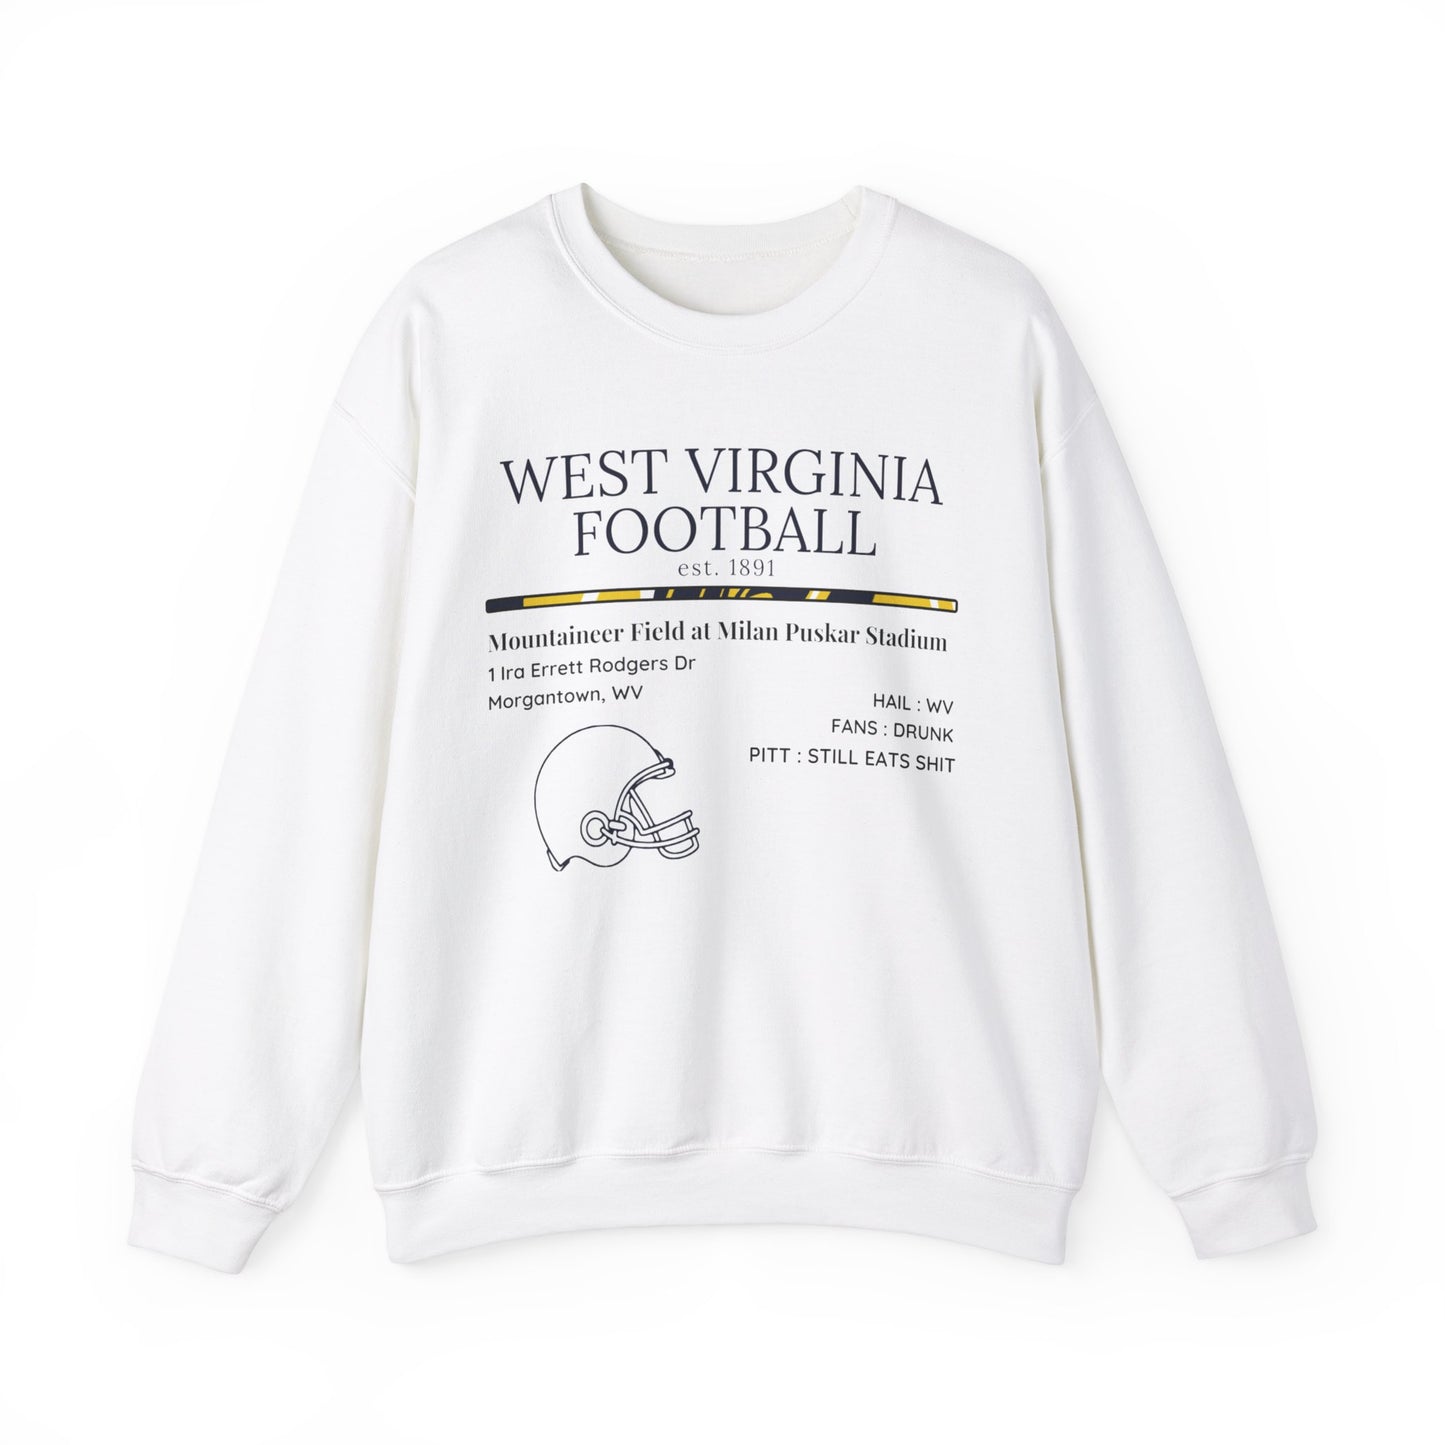 West Virginia Football Sweatshirt